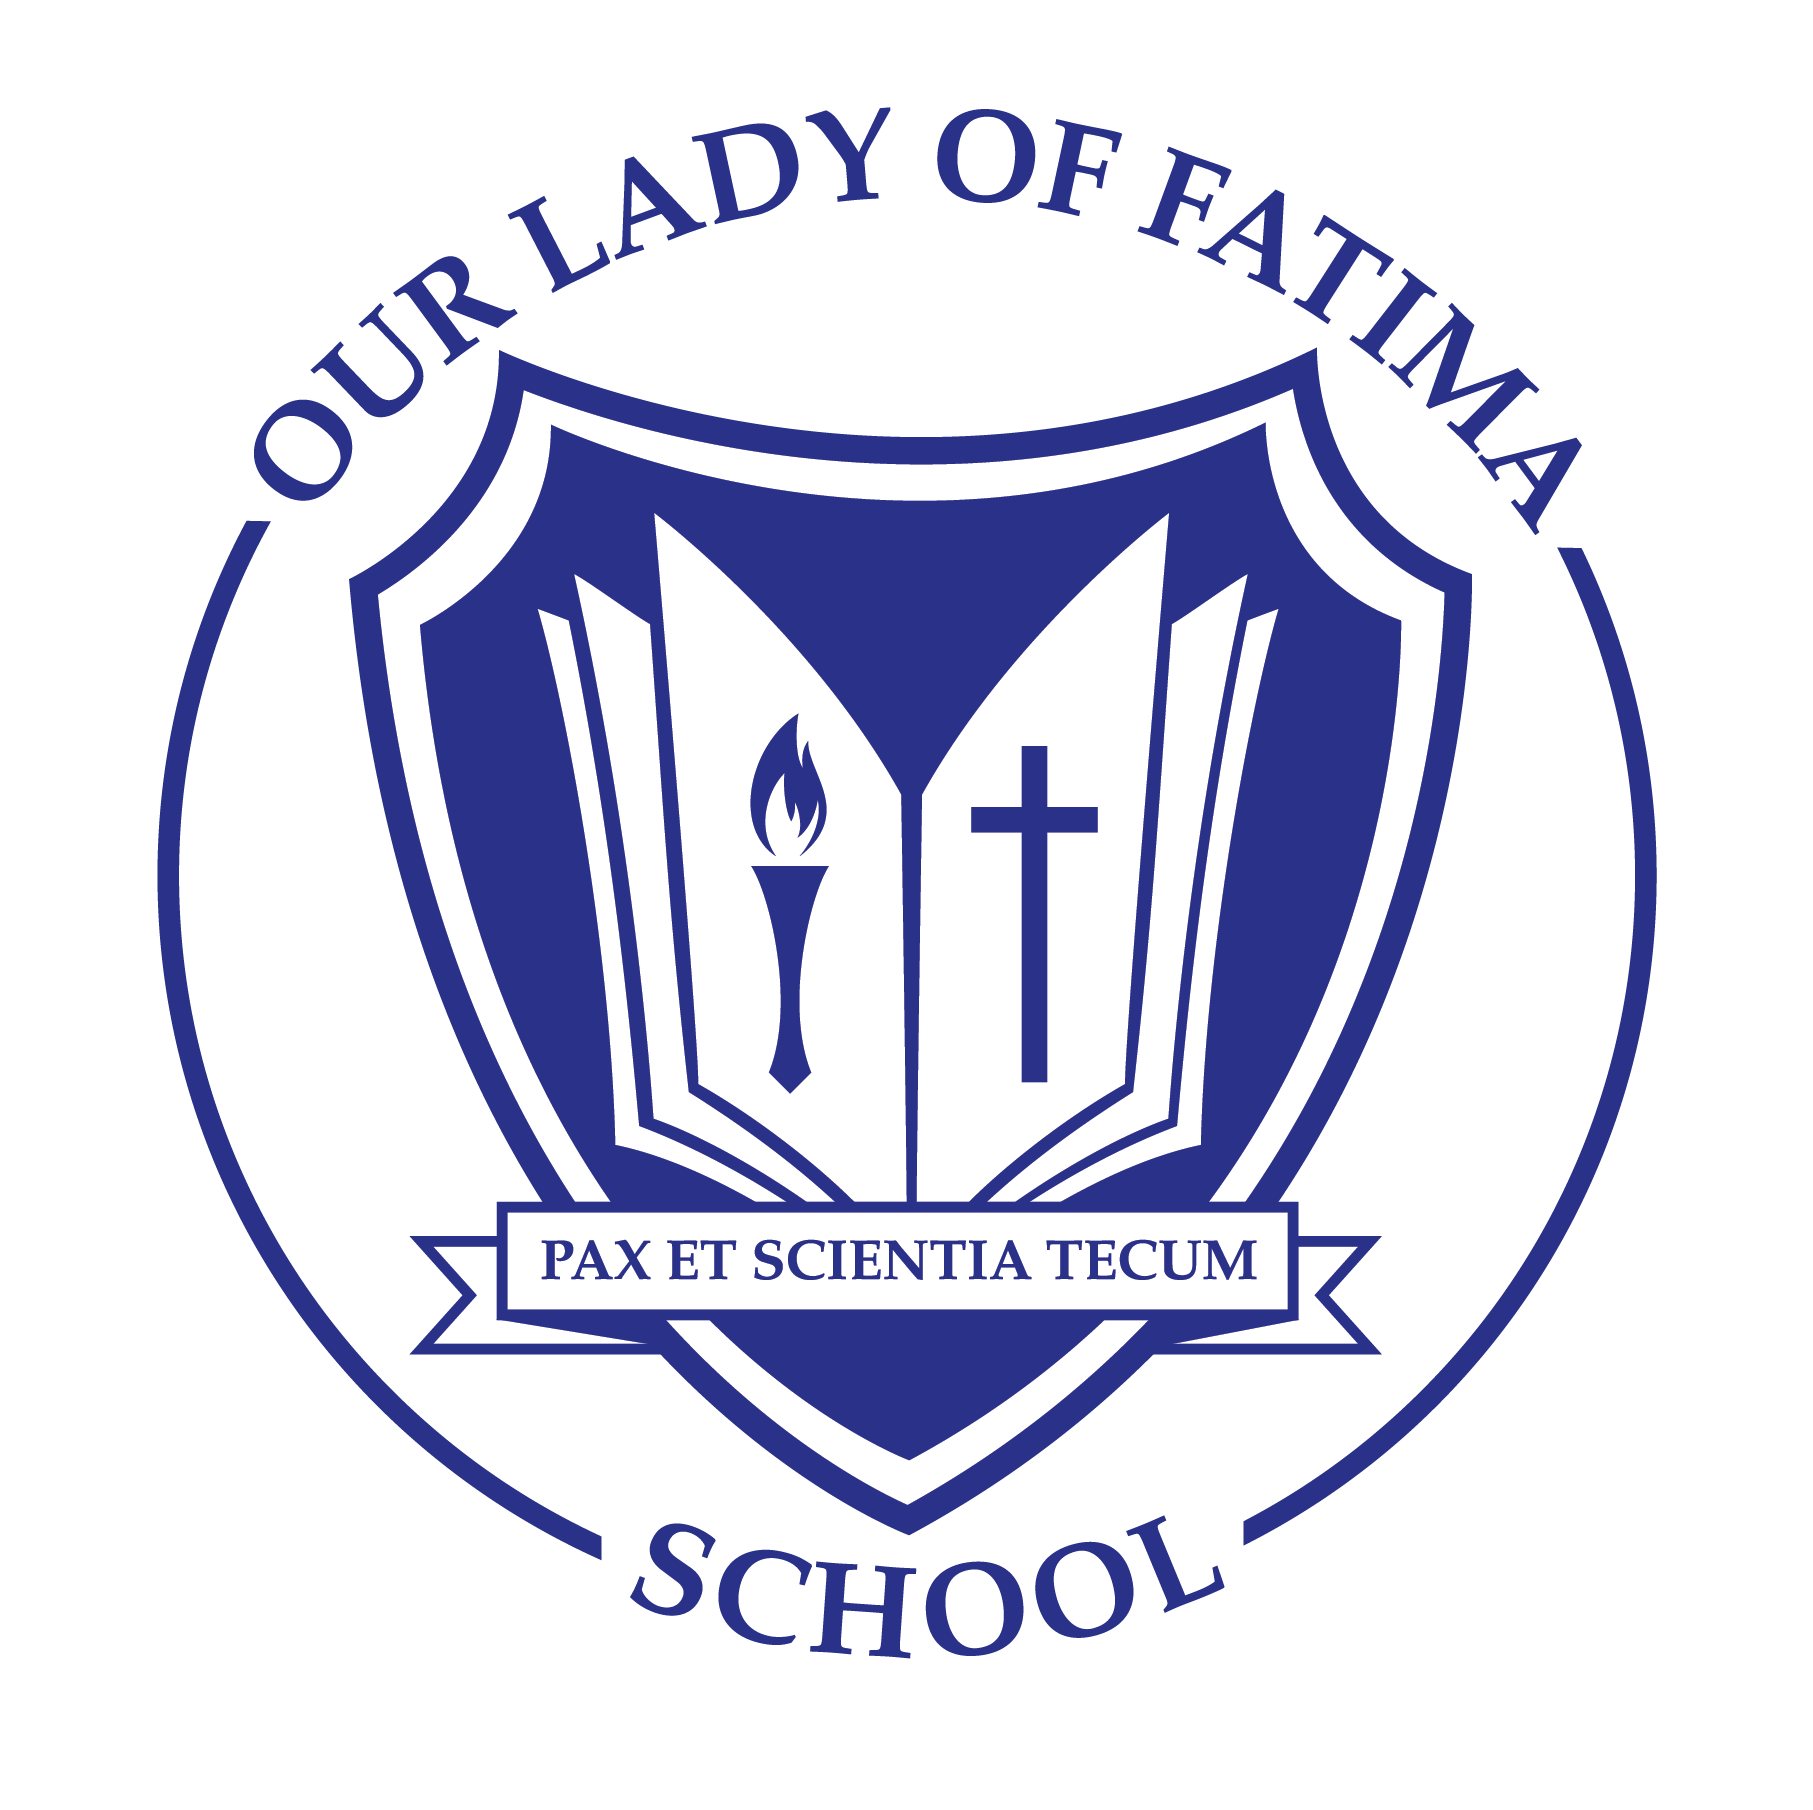 Our Lady Of Fatima - Our Lady Of Fatima School Logo (1813x1810)